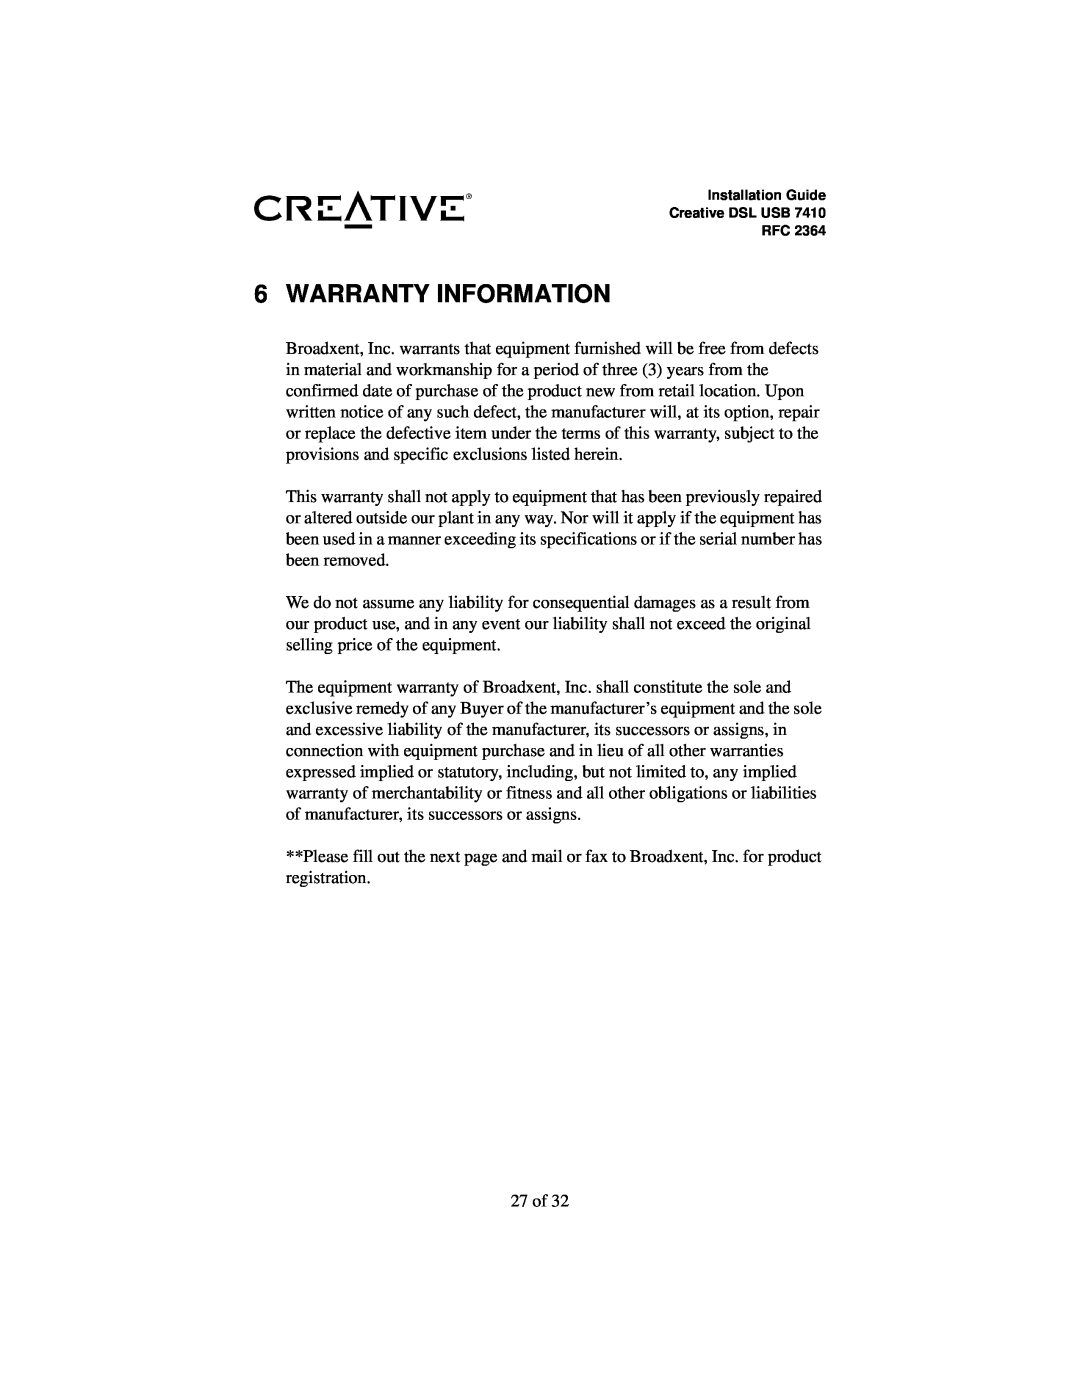 Creative RFC 2364 appendix Warranty Information 